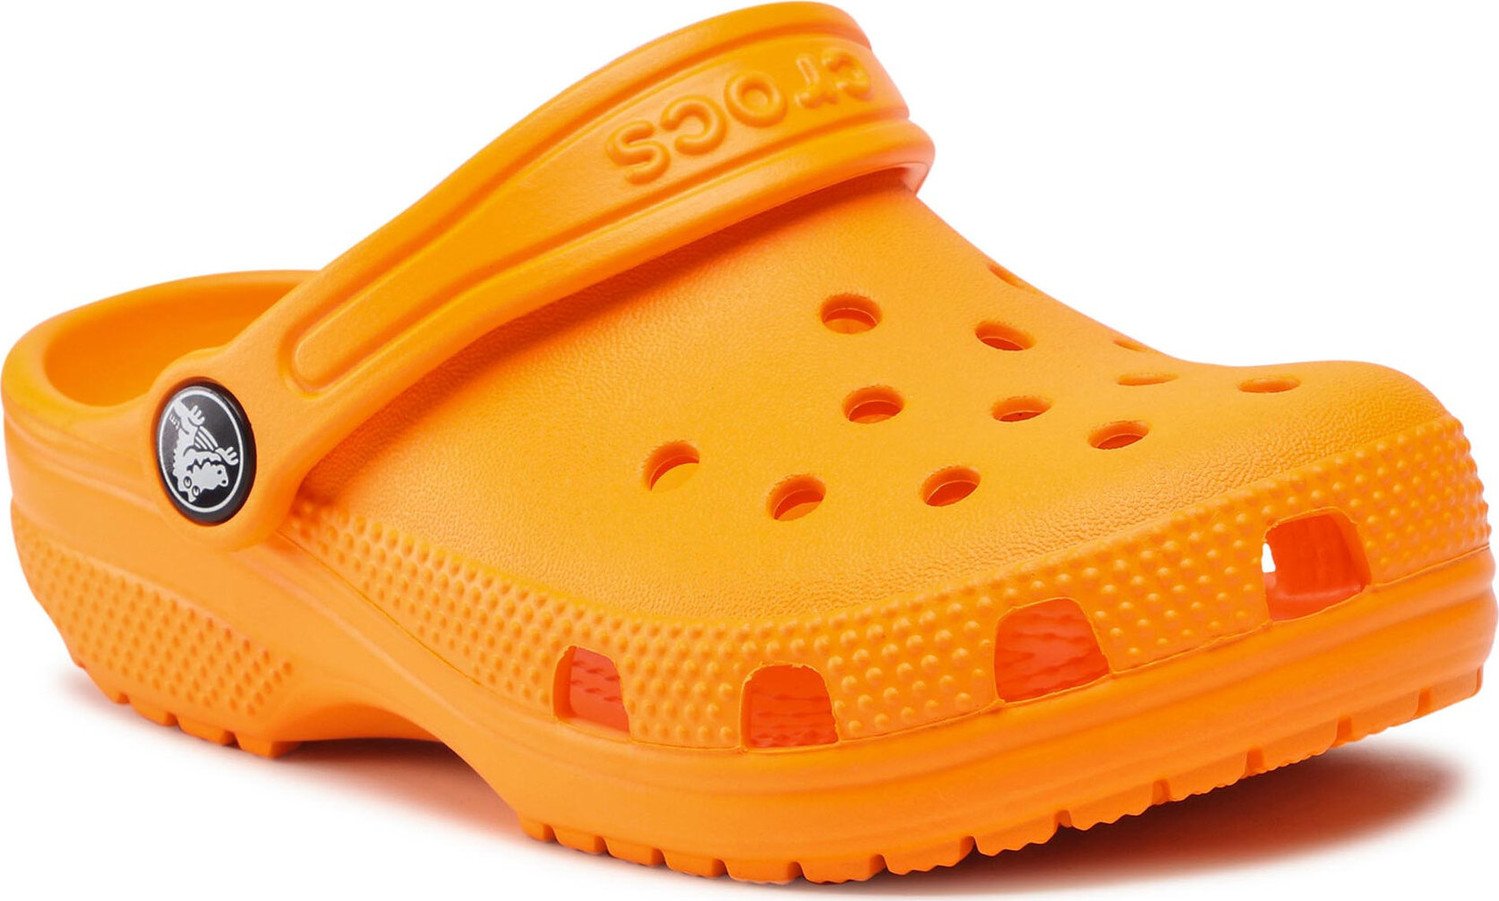 Nazouváky Crocs Classic Clog K 206991 Orange Zing